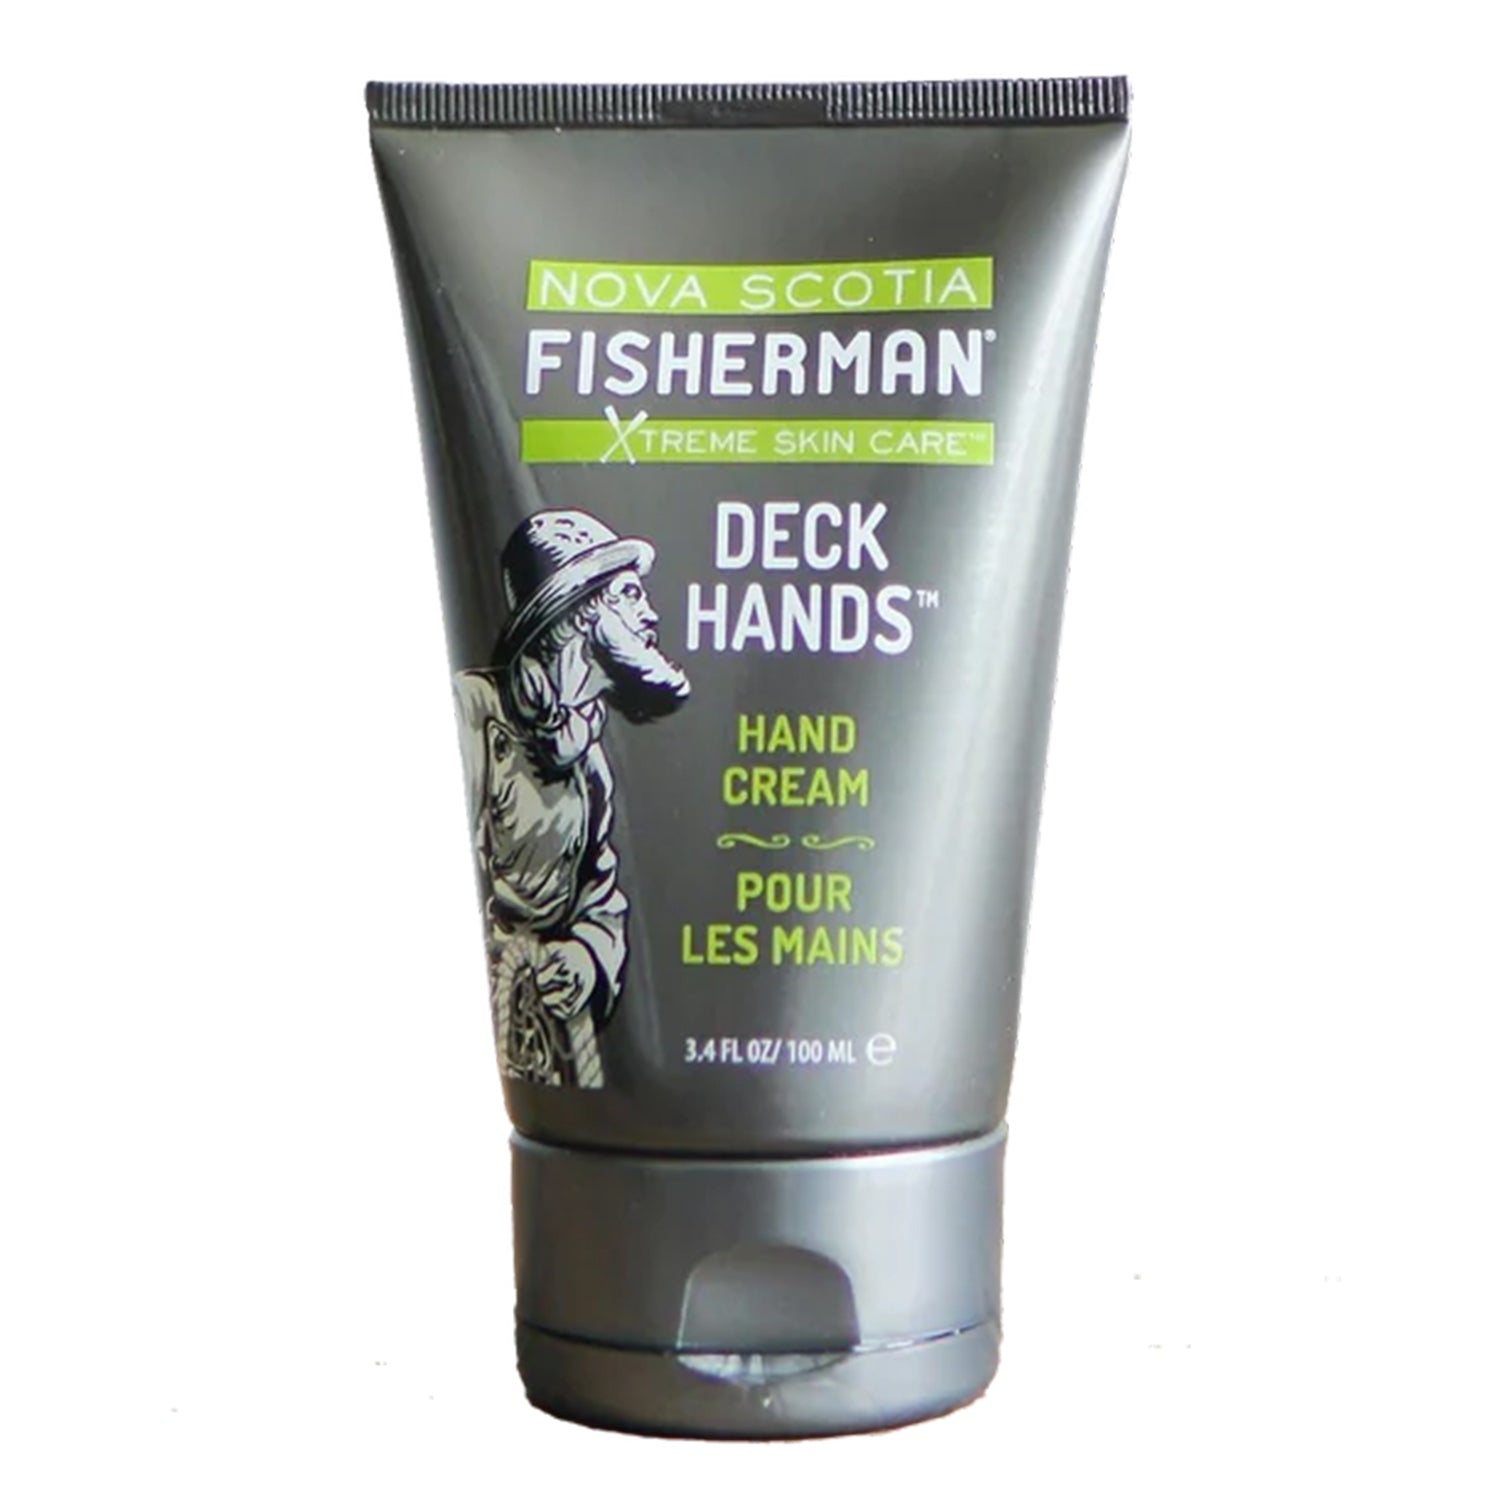 NOVA SCOTIA FISHERMAN Deck Hands Hand Cream